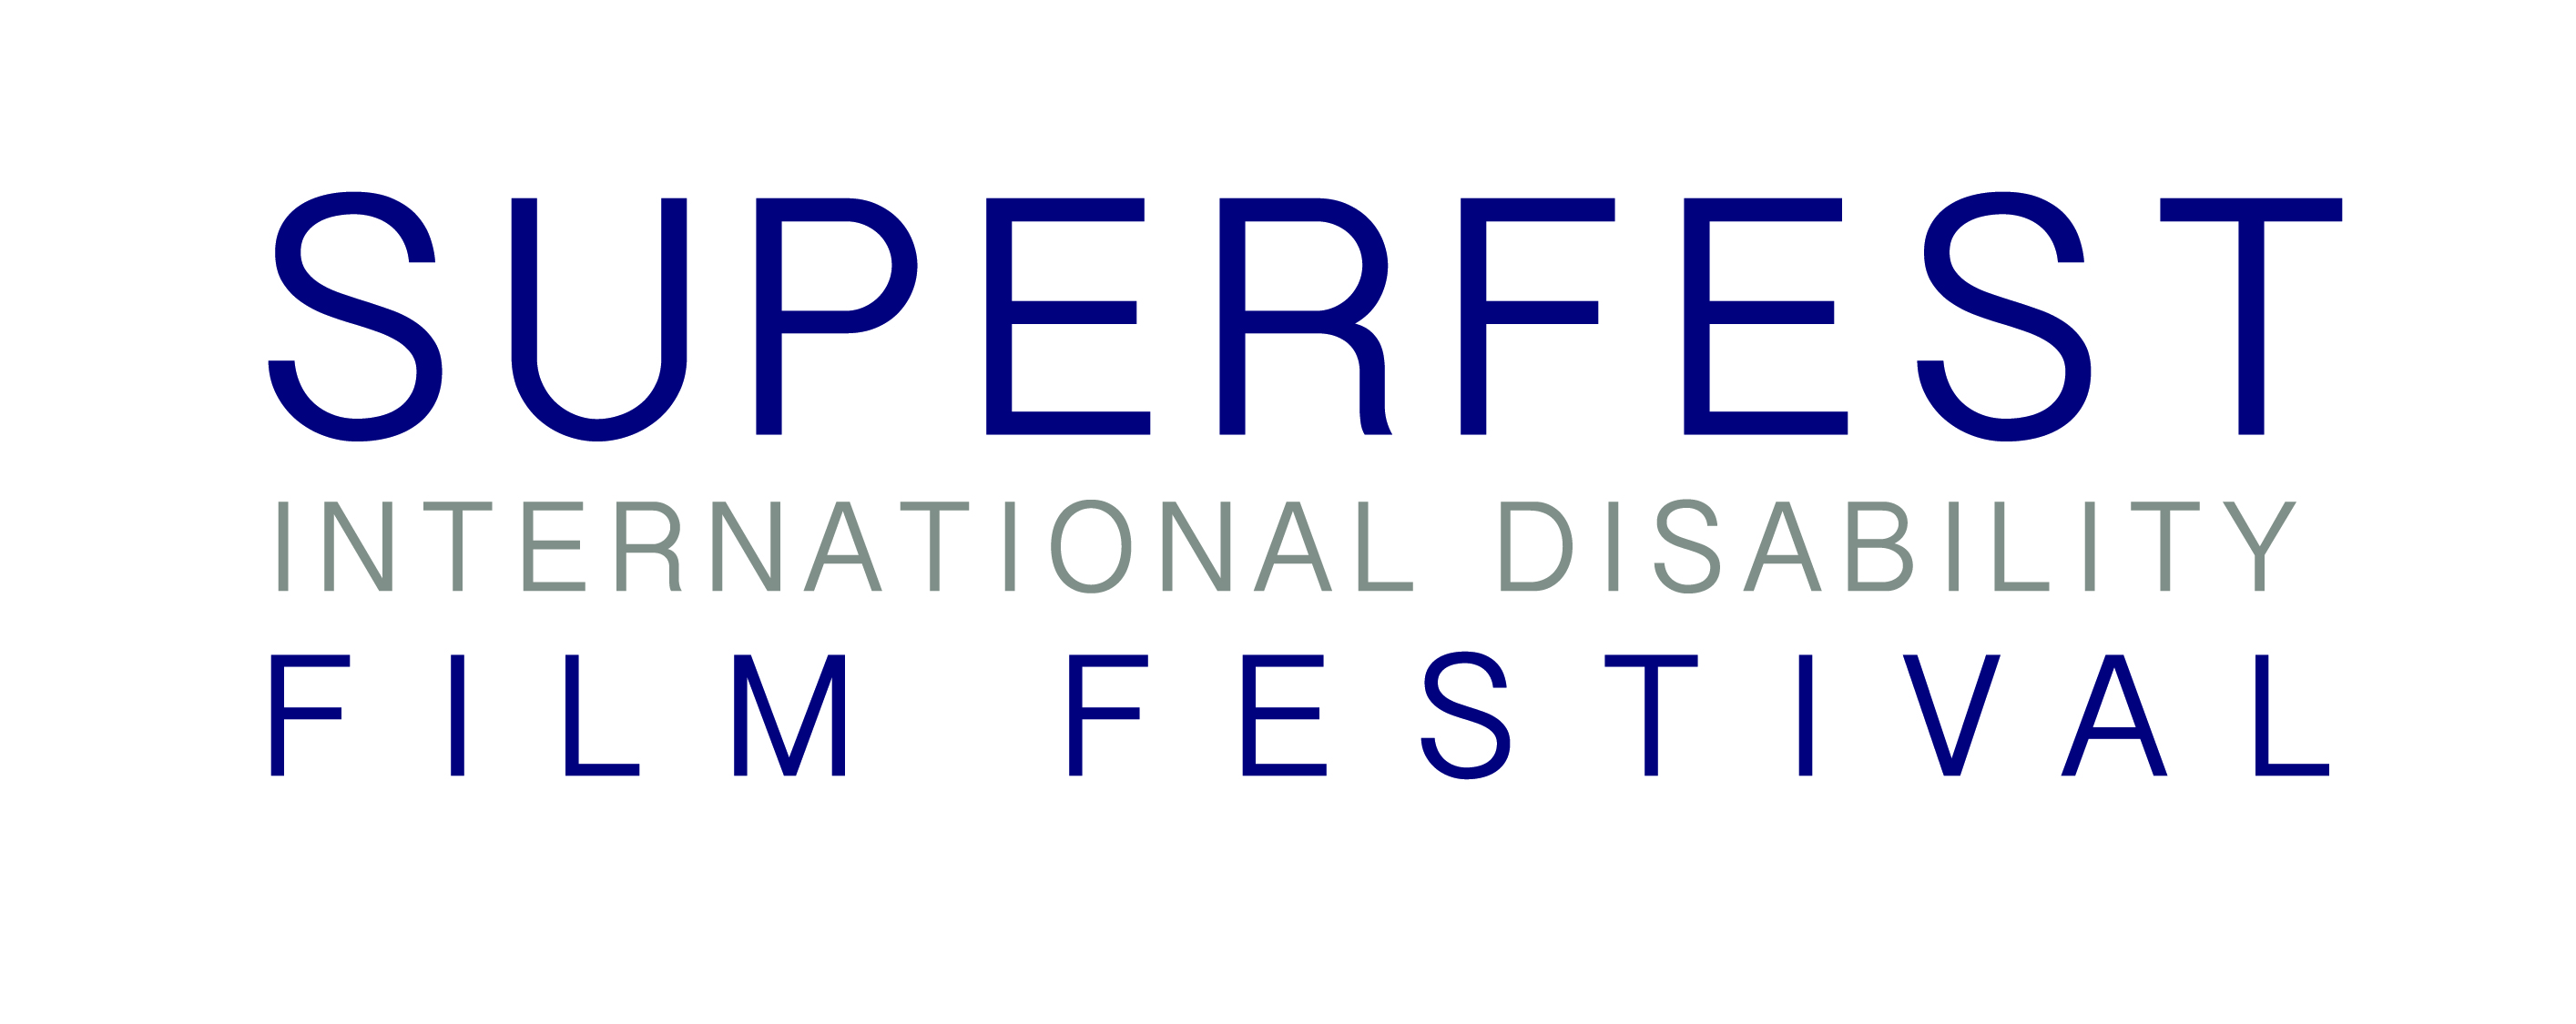 Logo image, text reads "Superfest International Disability Film Festival"